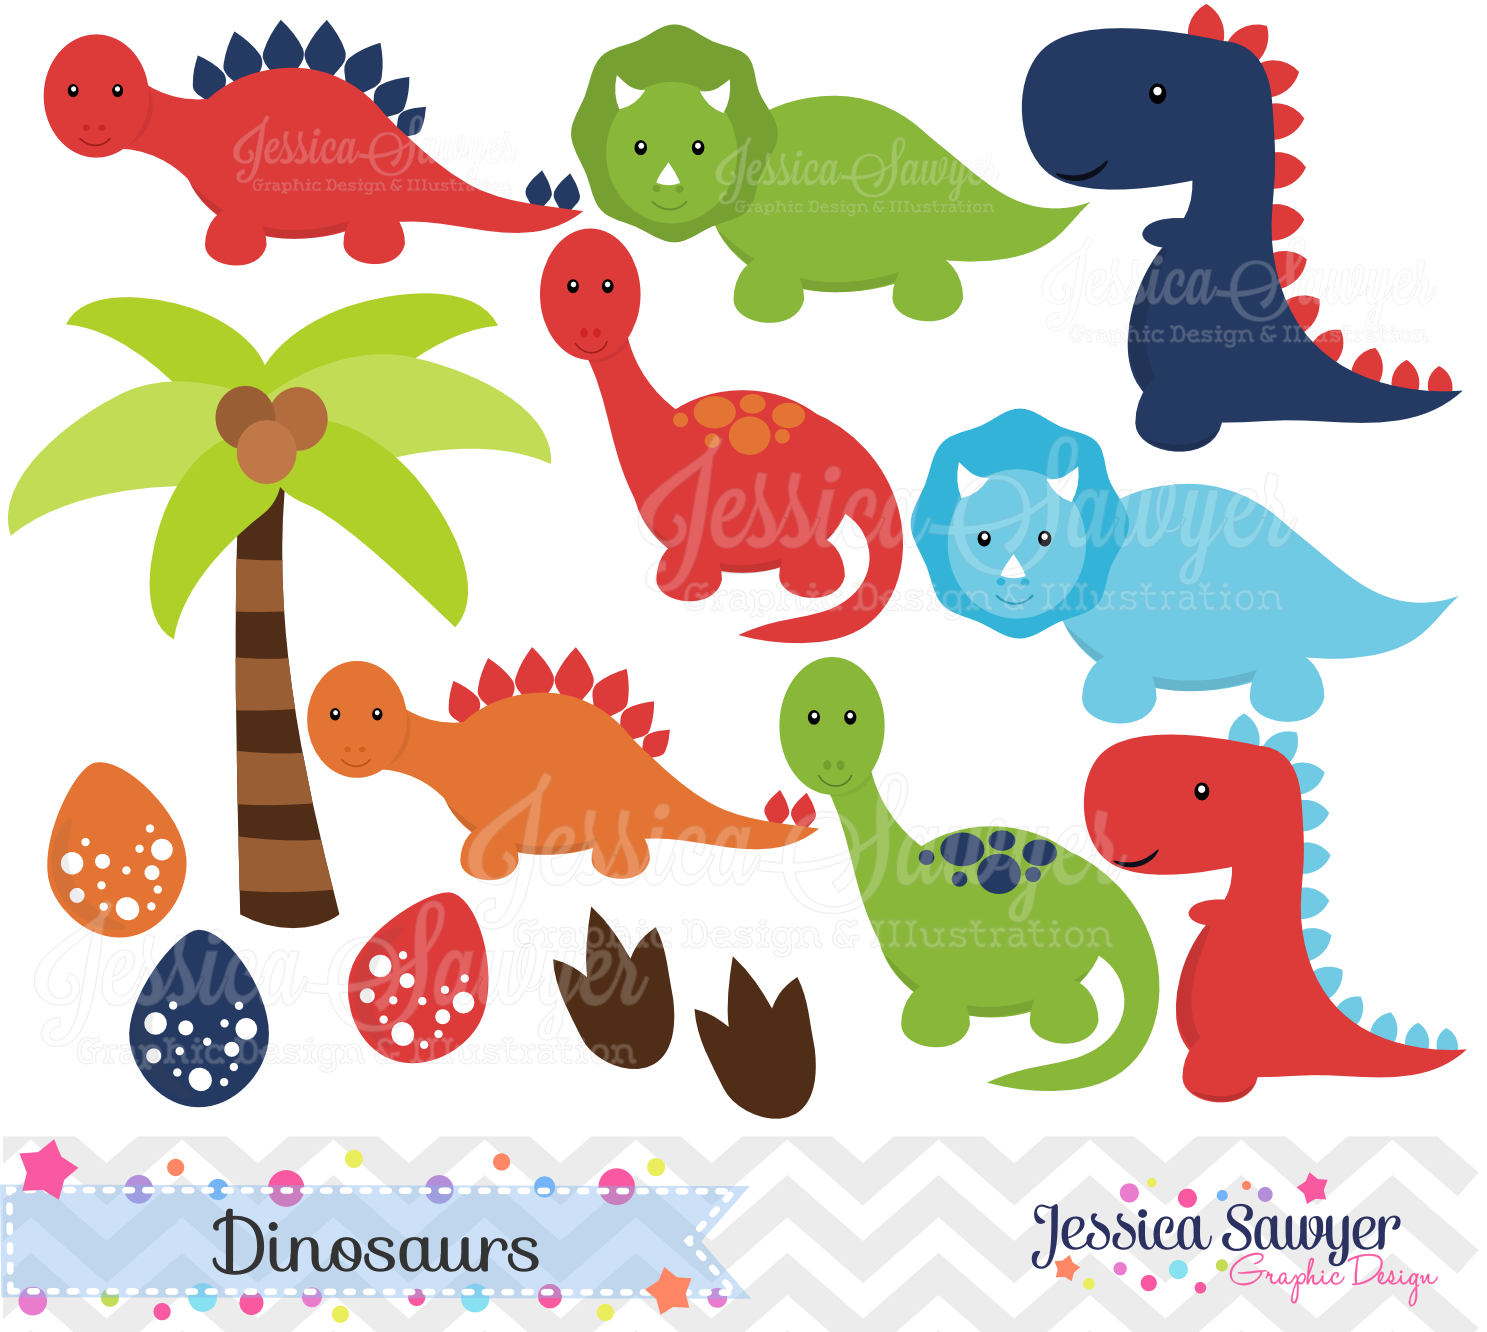 Jessica Sawyer Design  New Dinosaur Clipart